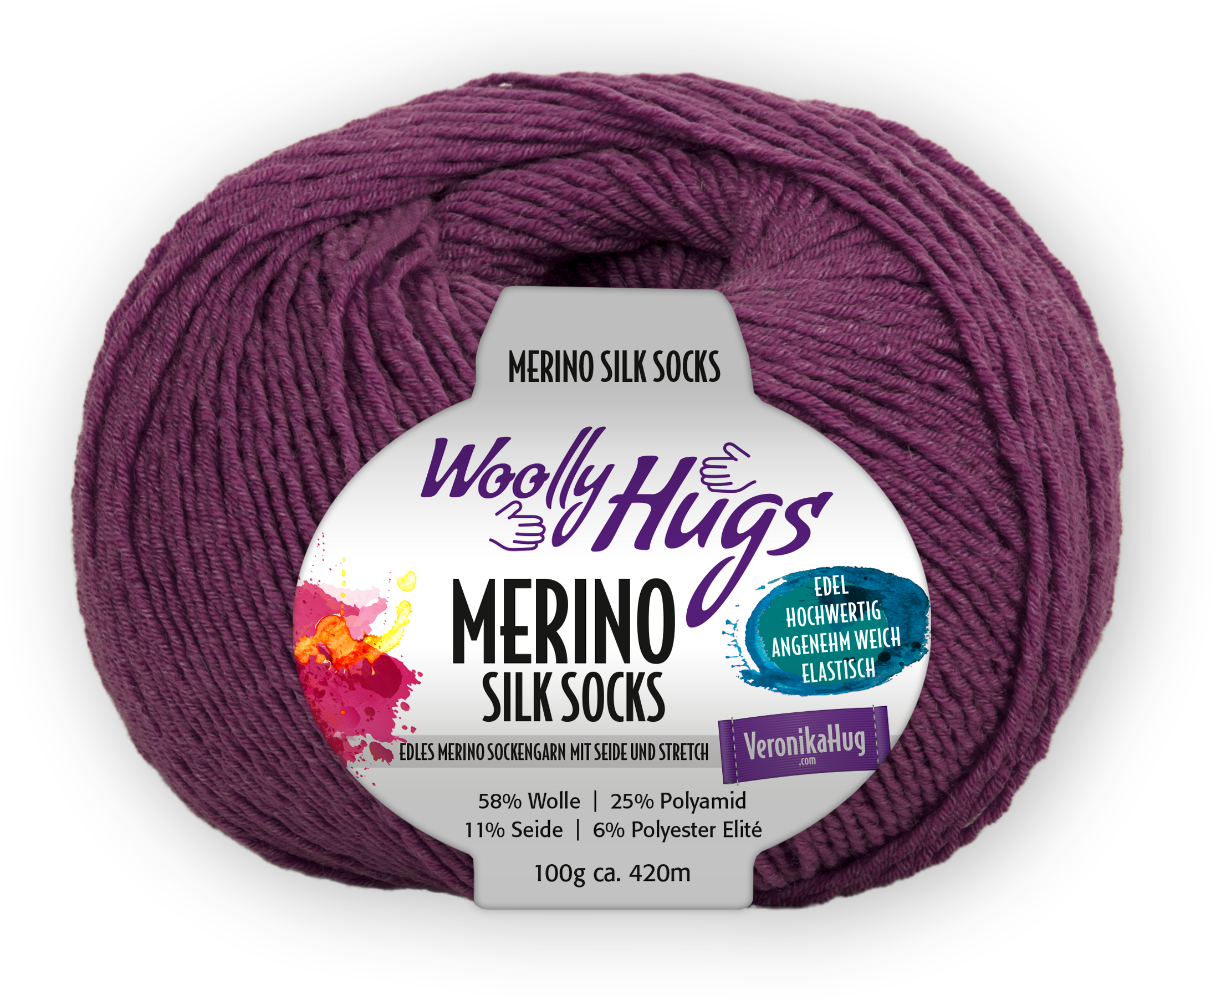 Merino Silk Socks Stretch, 4-fach von Woolly Hugs 0247 - pflaume